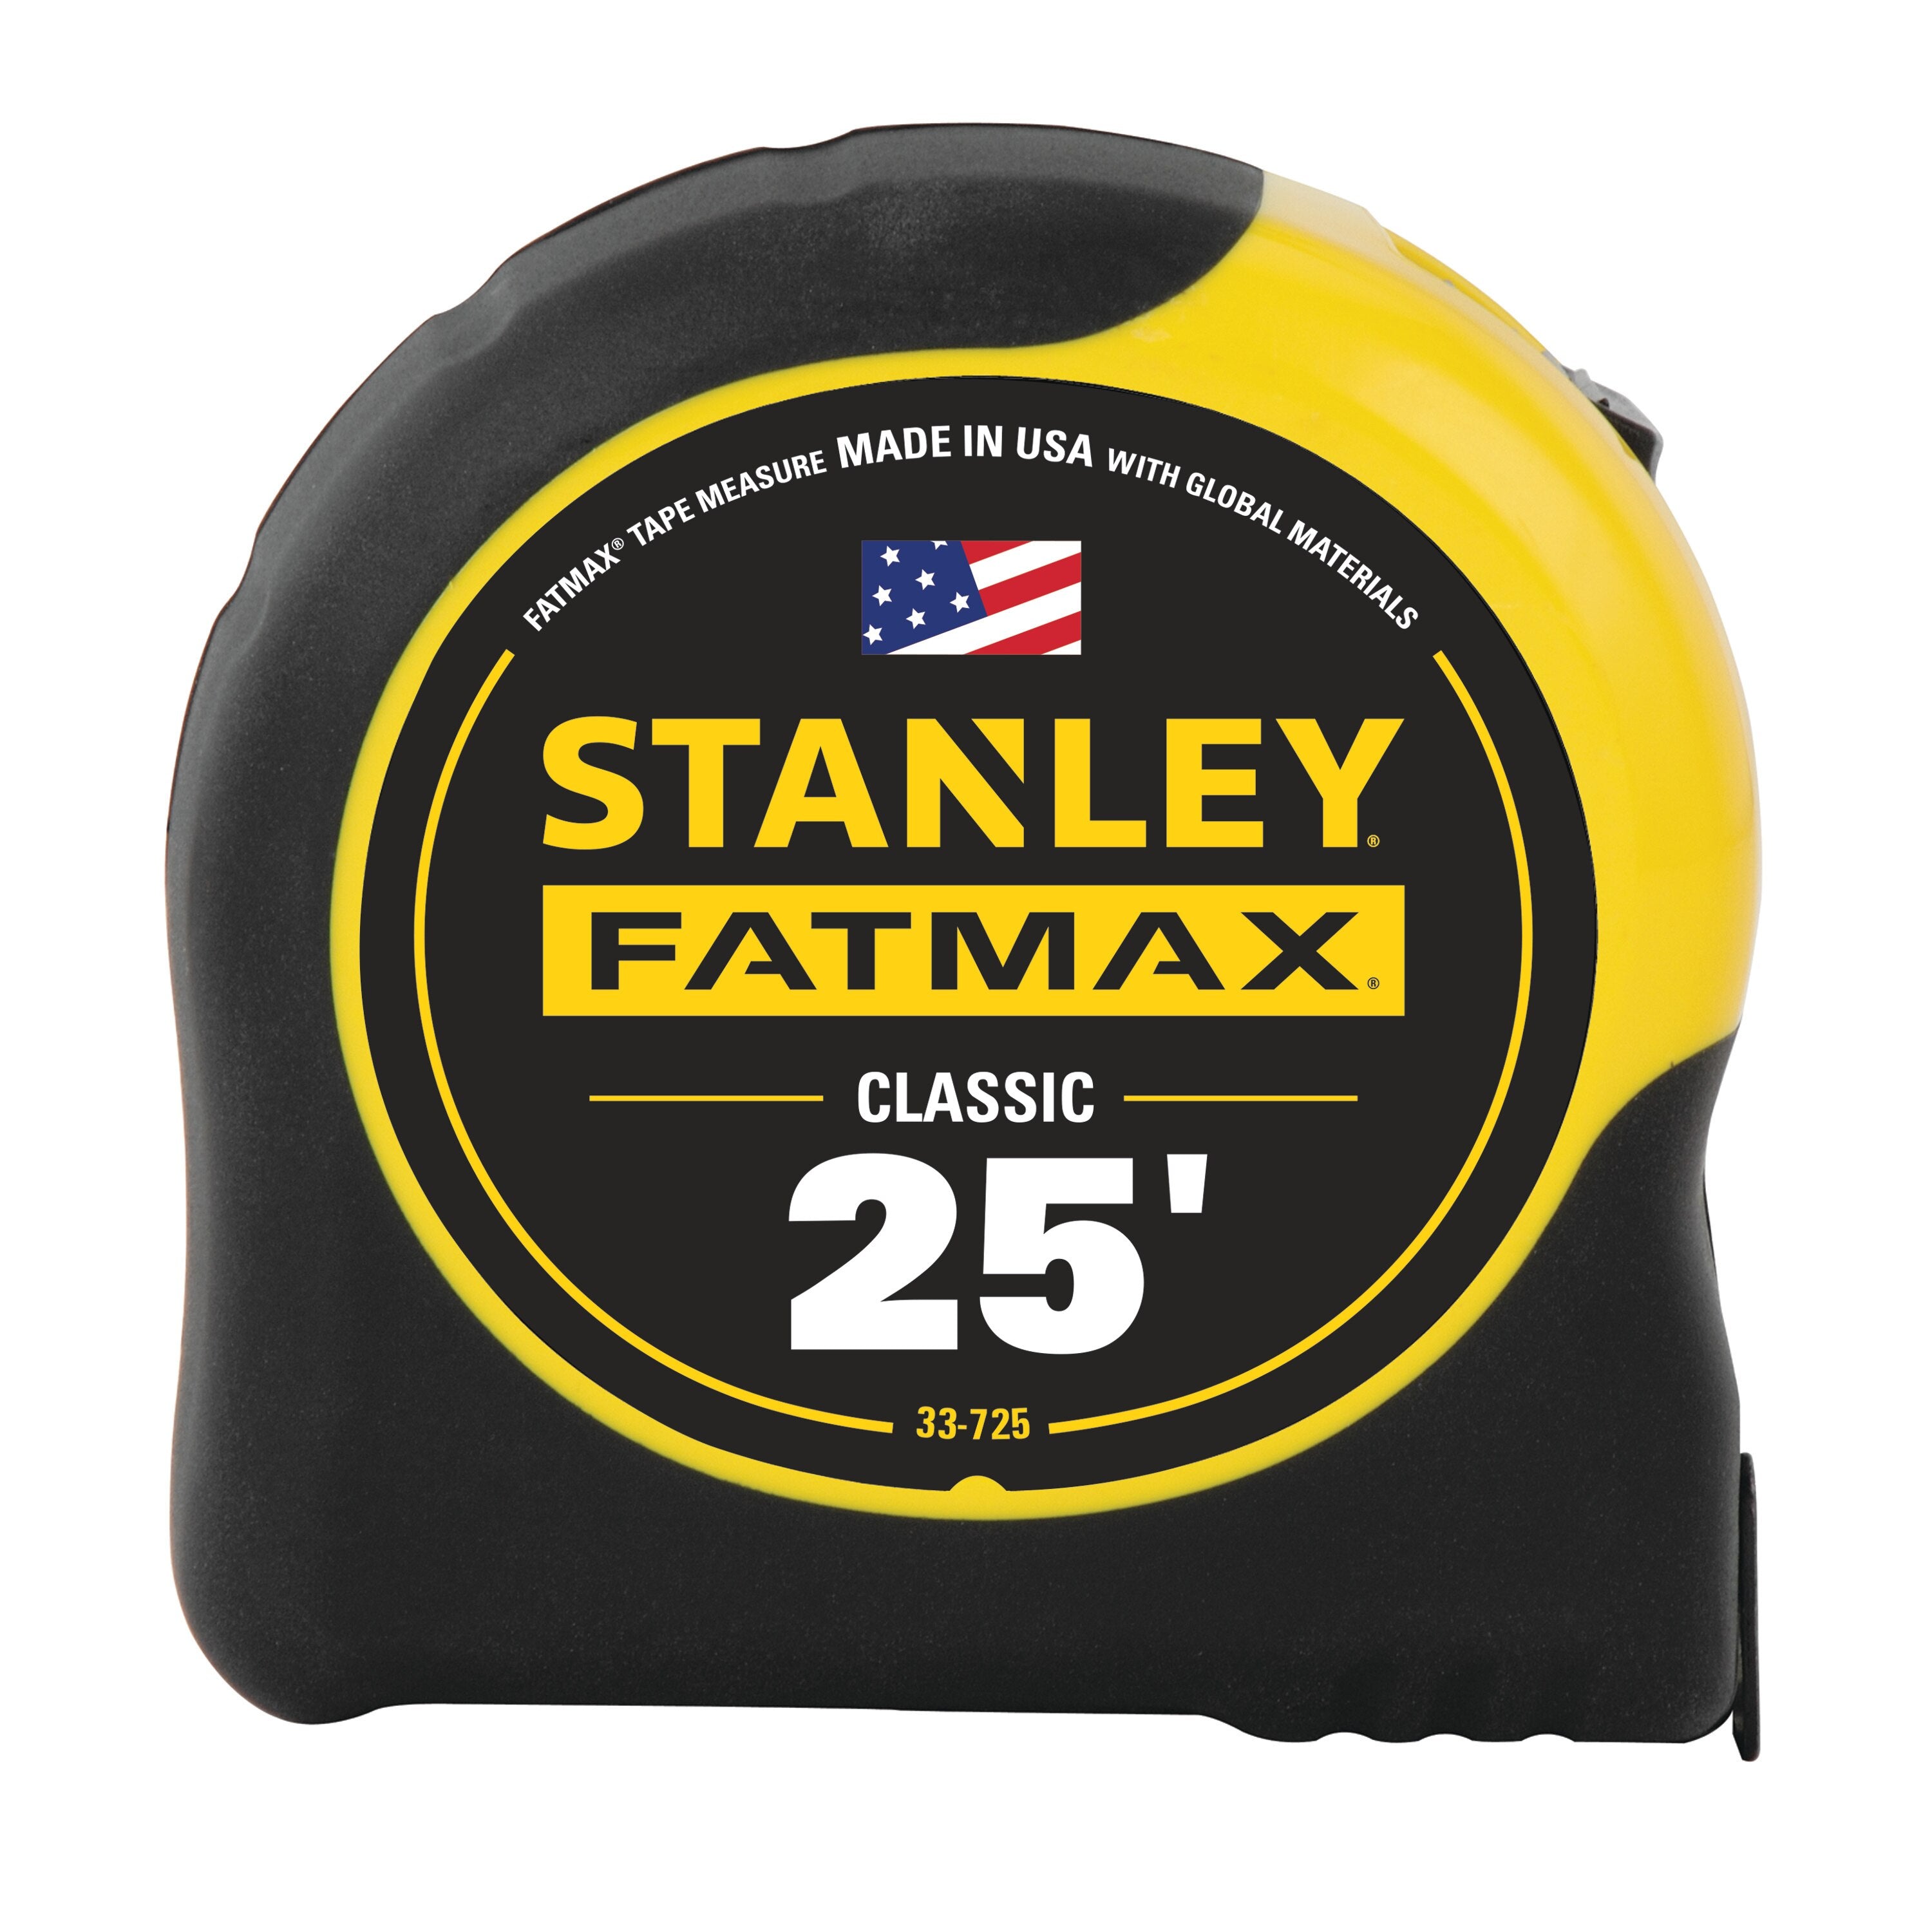 Stanley Fatmax Classic Tape Measure